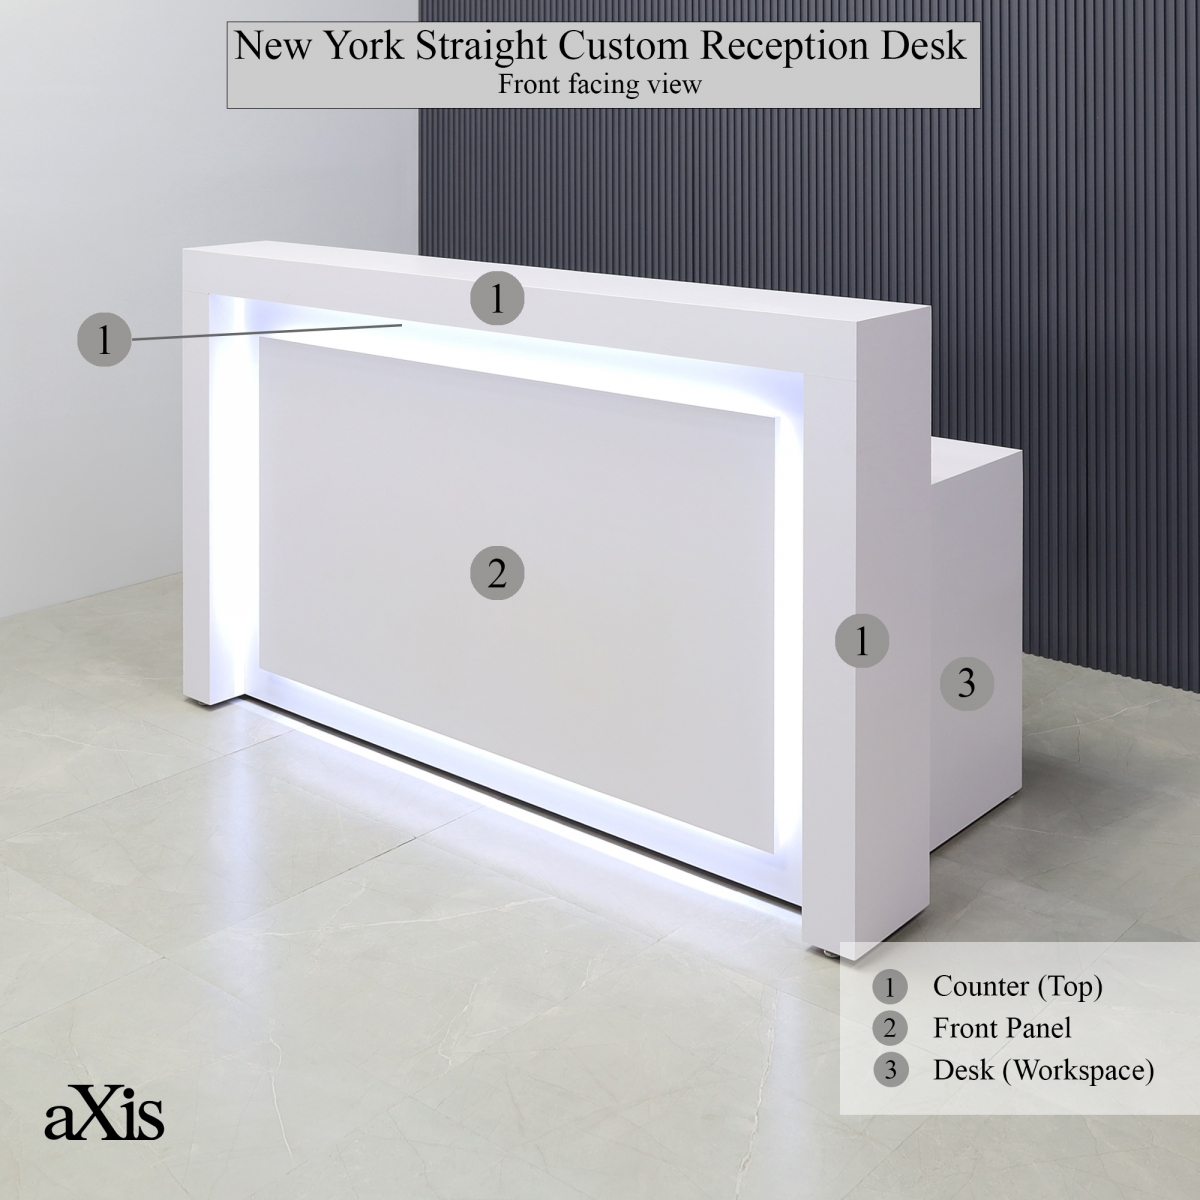 New York Straight Shape Custom Reception Desk